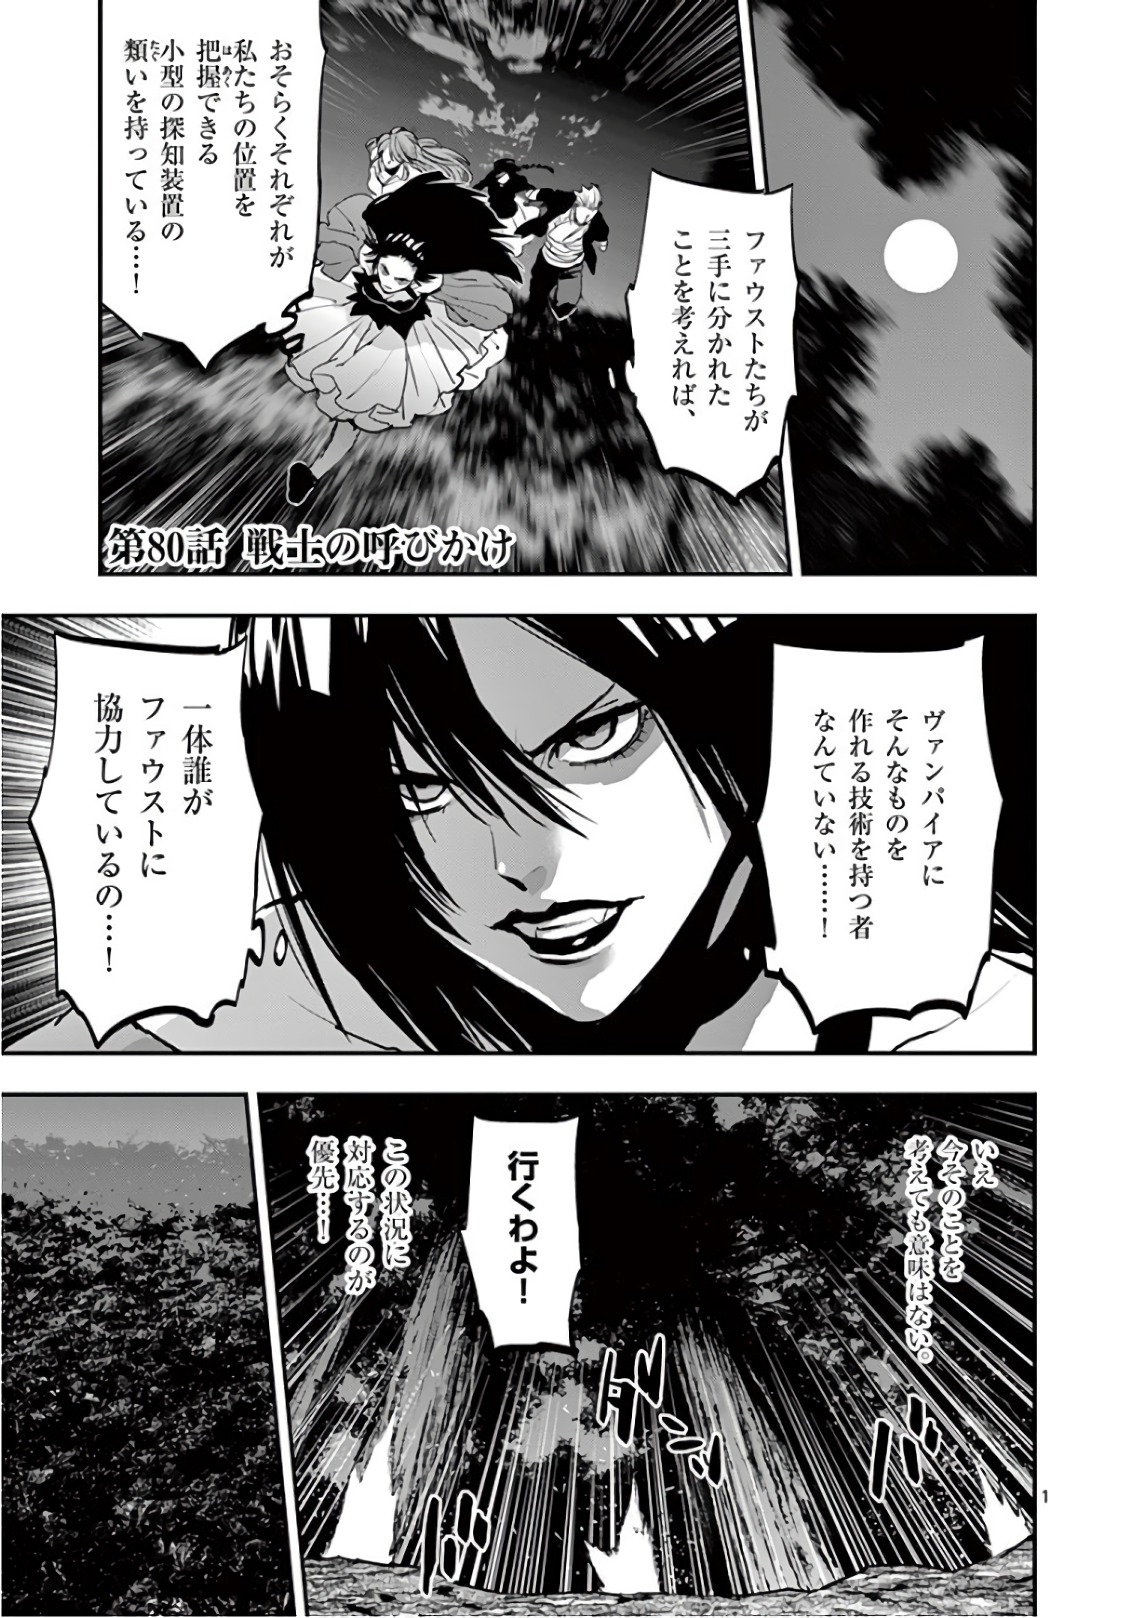 Ginrou Bloodborne - Chapter 80 - Page 1